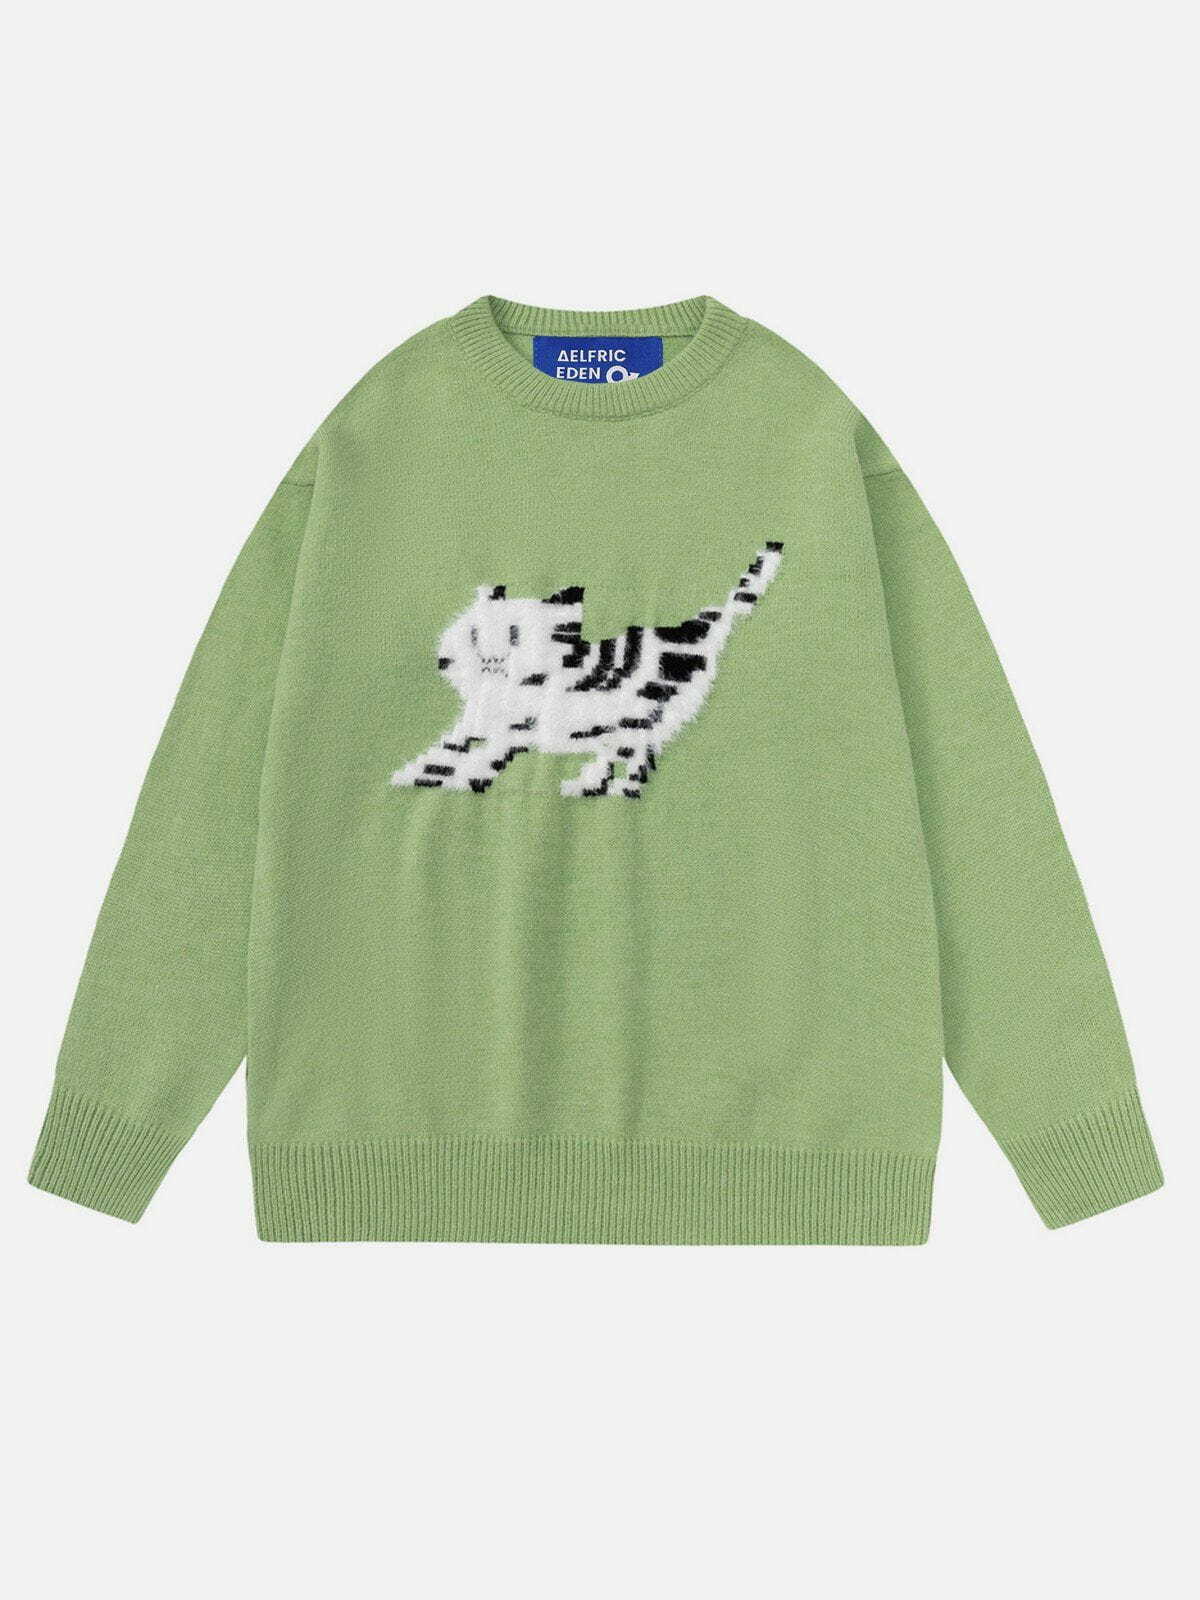 chic cat flocking sweater   youthful & trendy design 3212